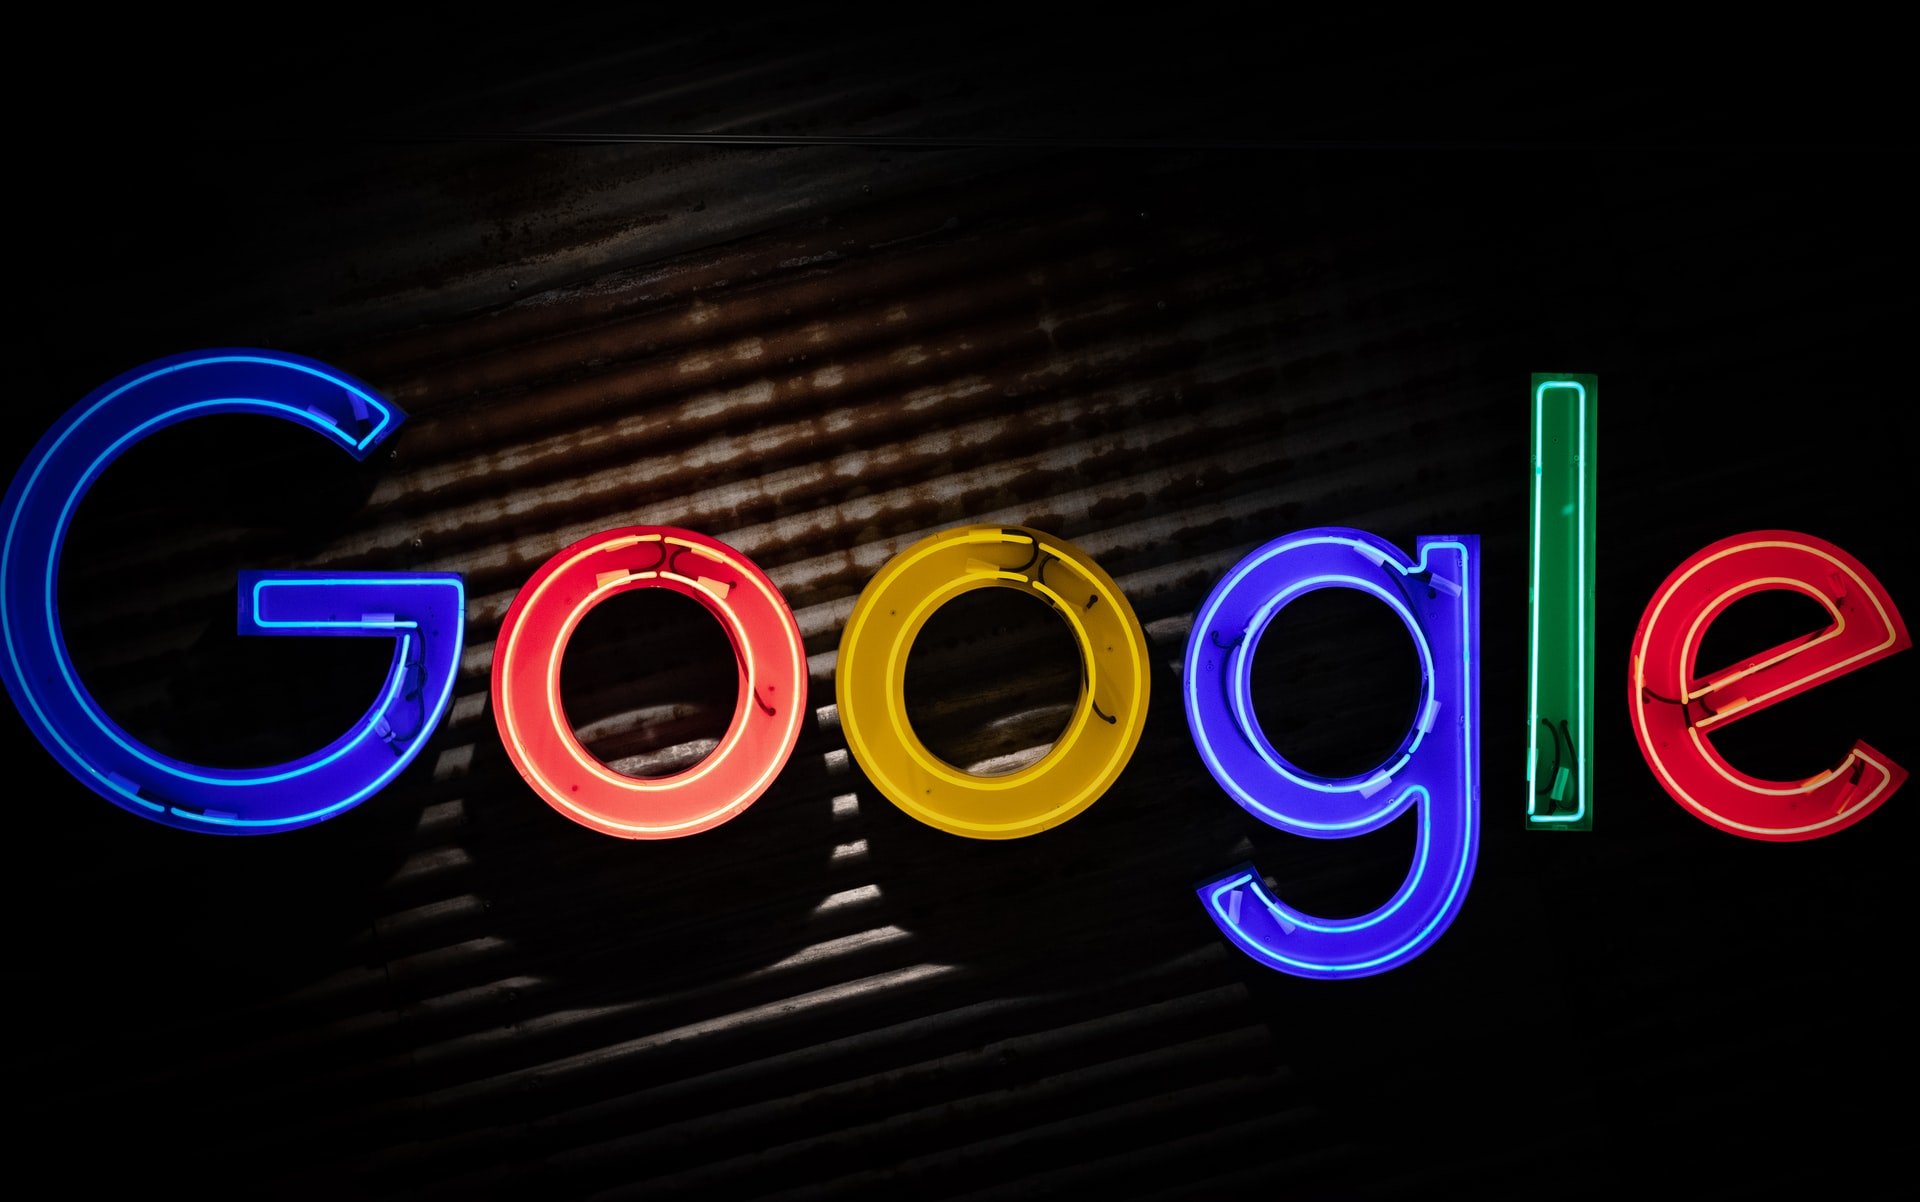 Google logo mitchell luo unsplash